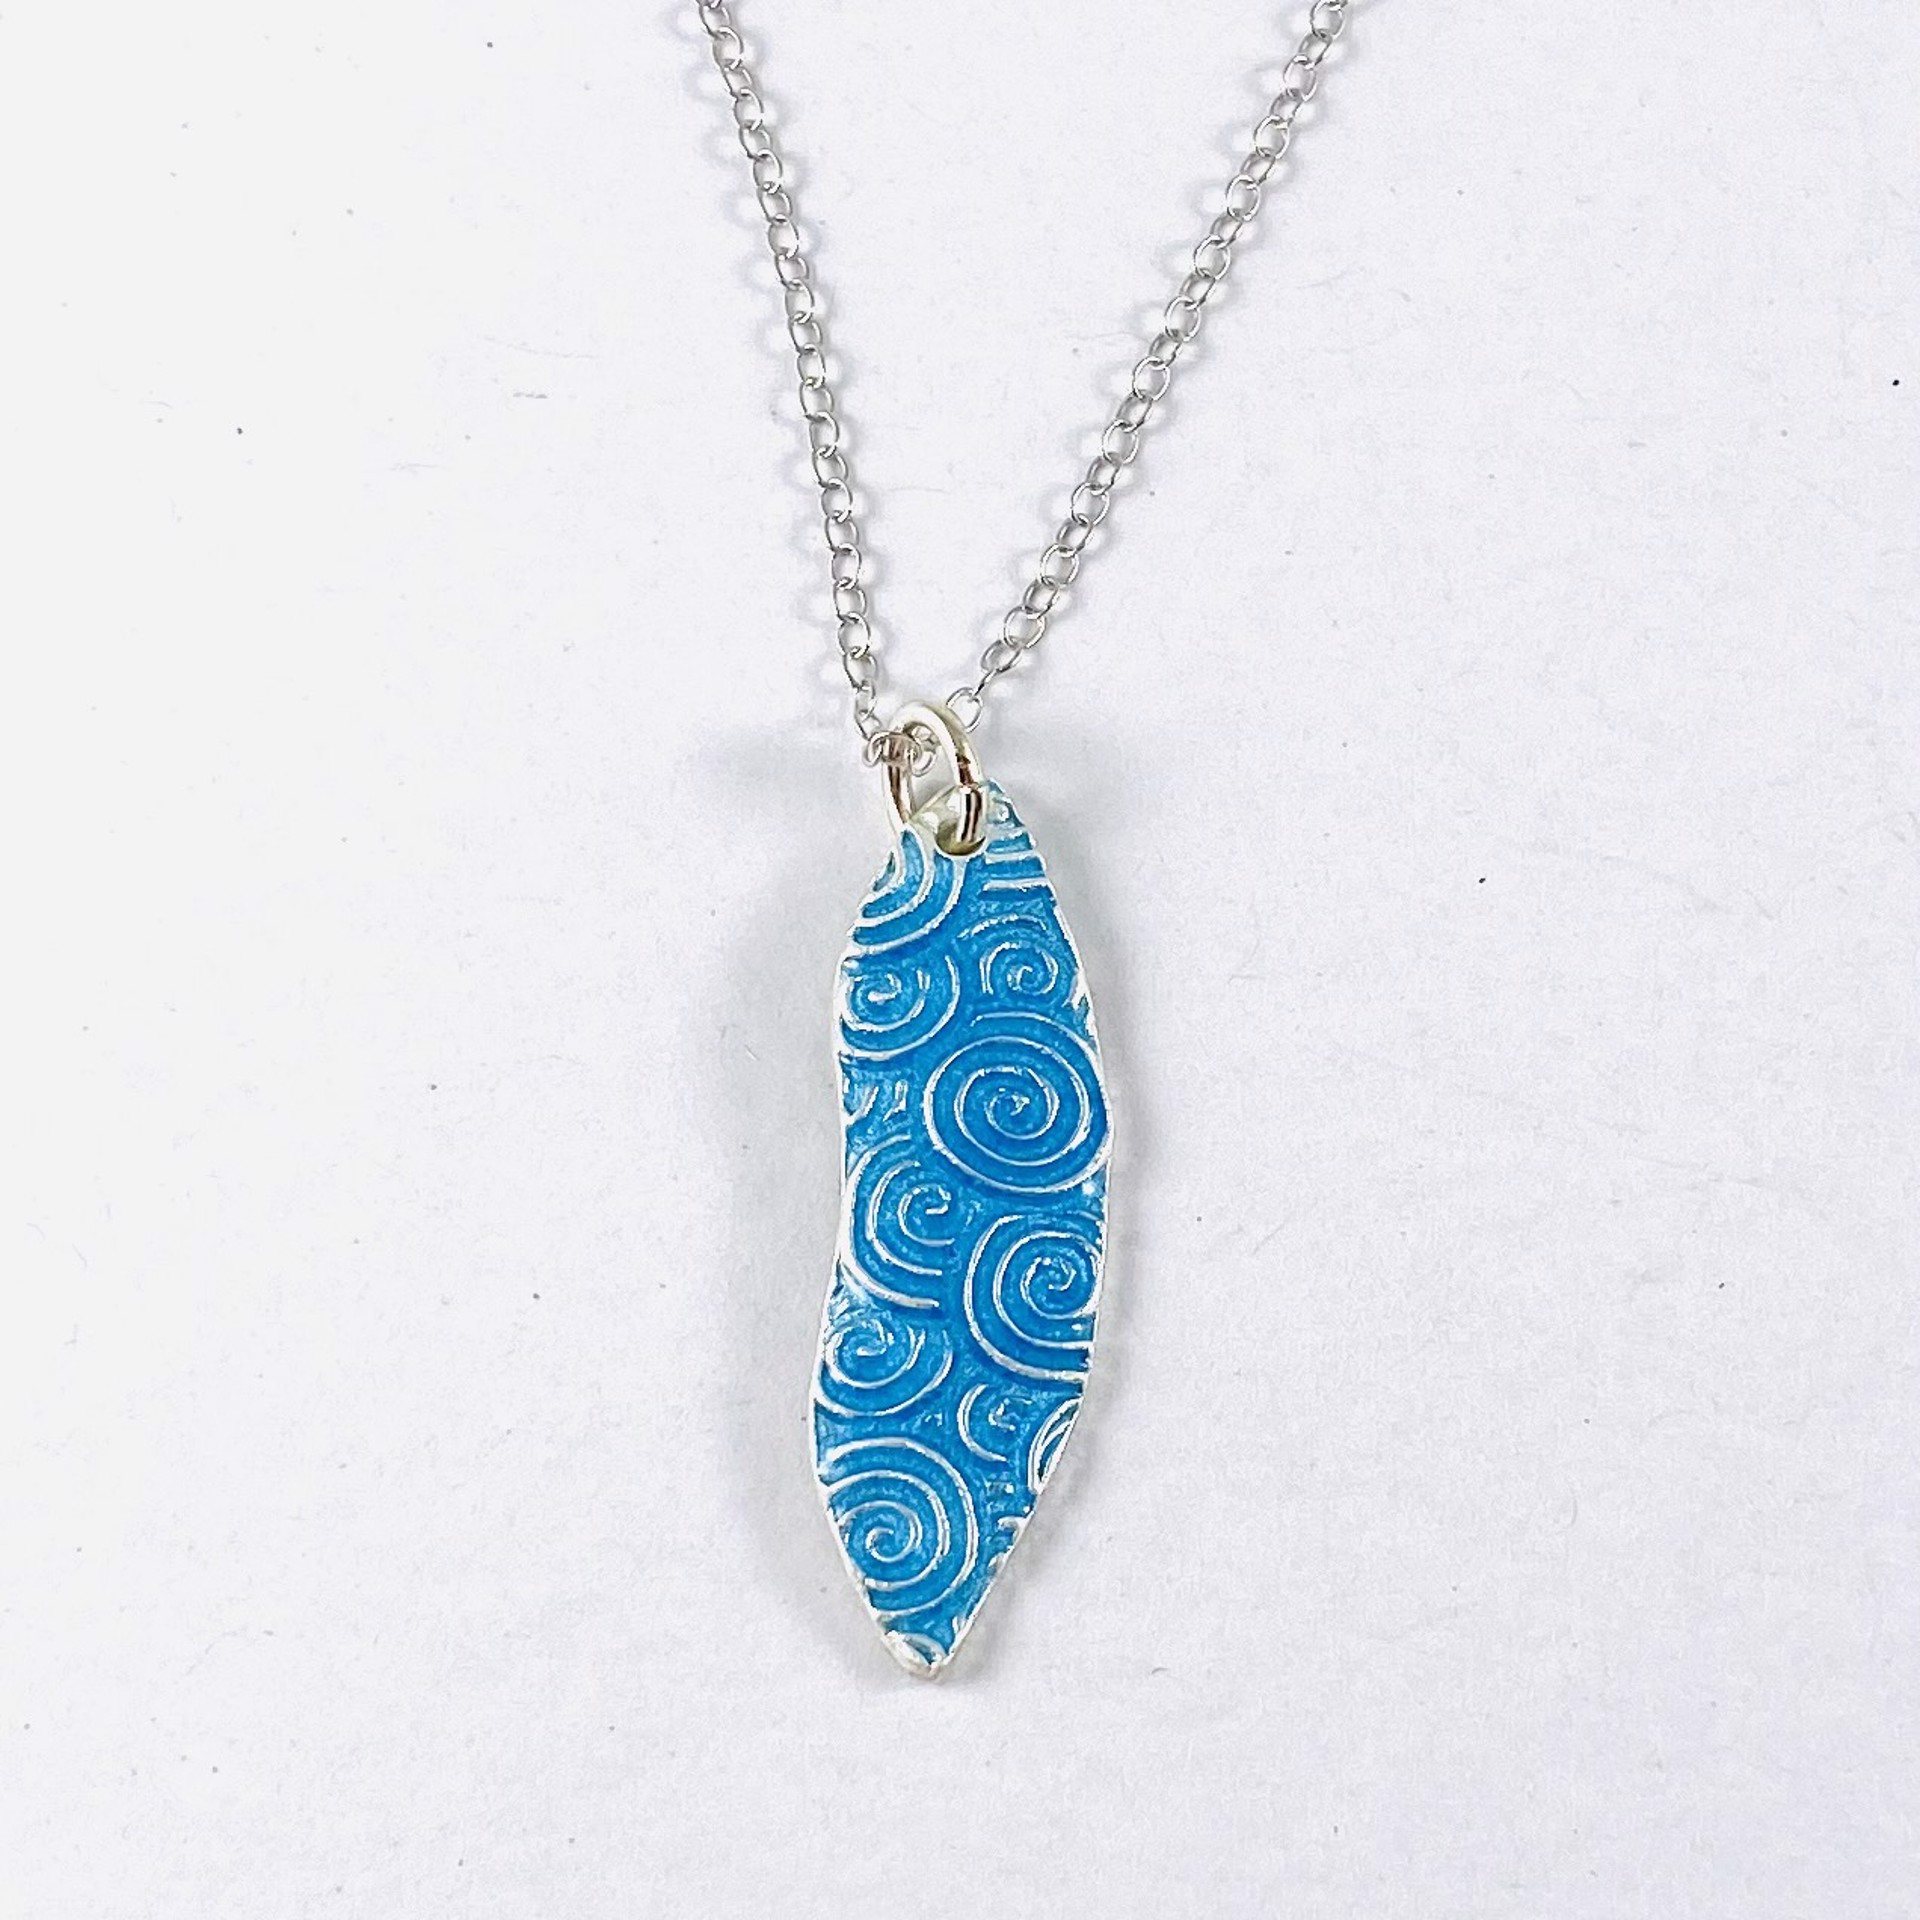 KH20-31 Blue Wave Pendant, 18" rhodium plated chain by Karen Hakim